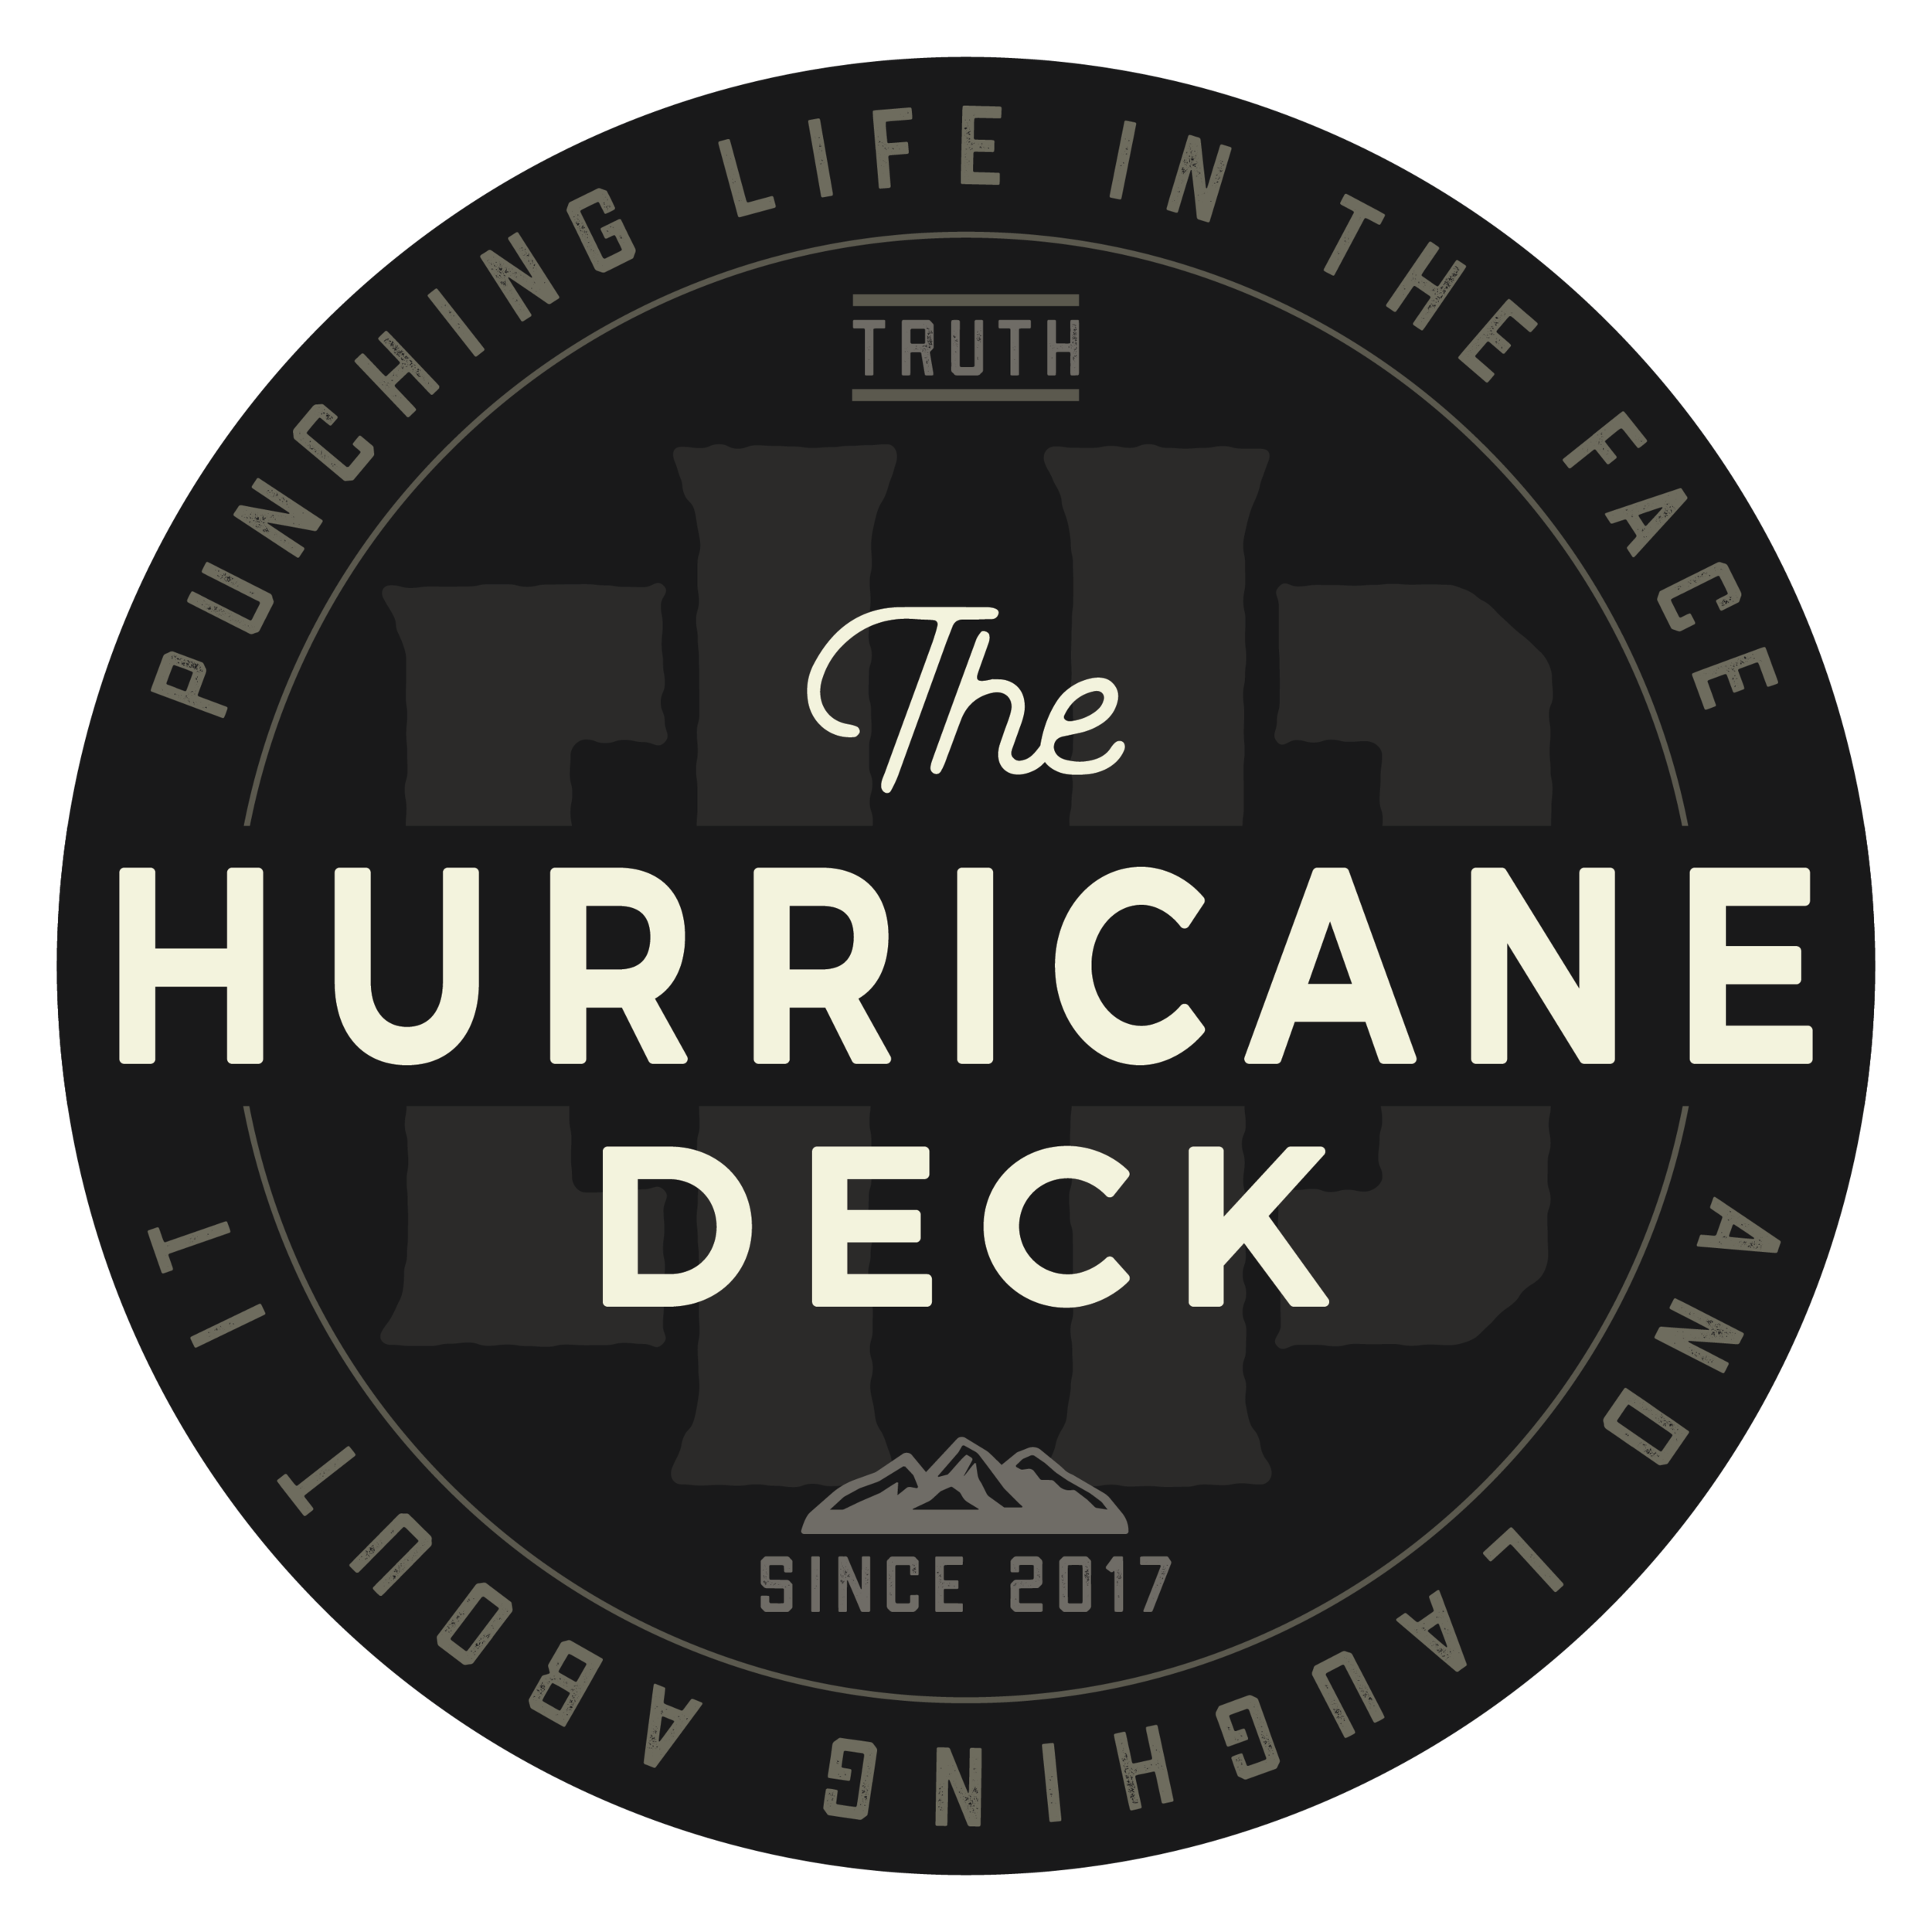 The Hurricane Deck